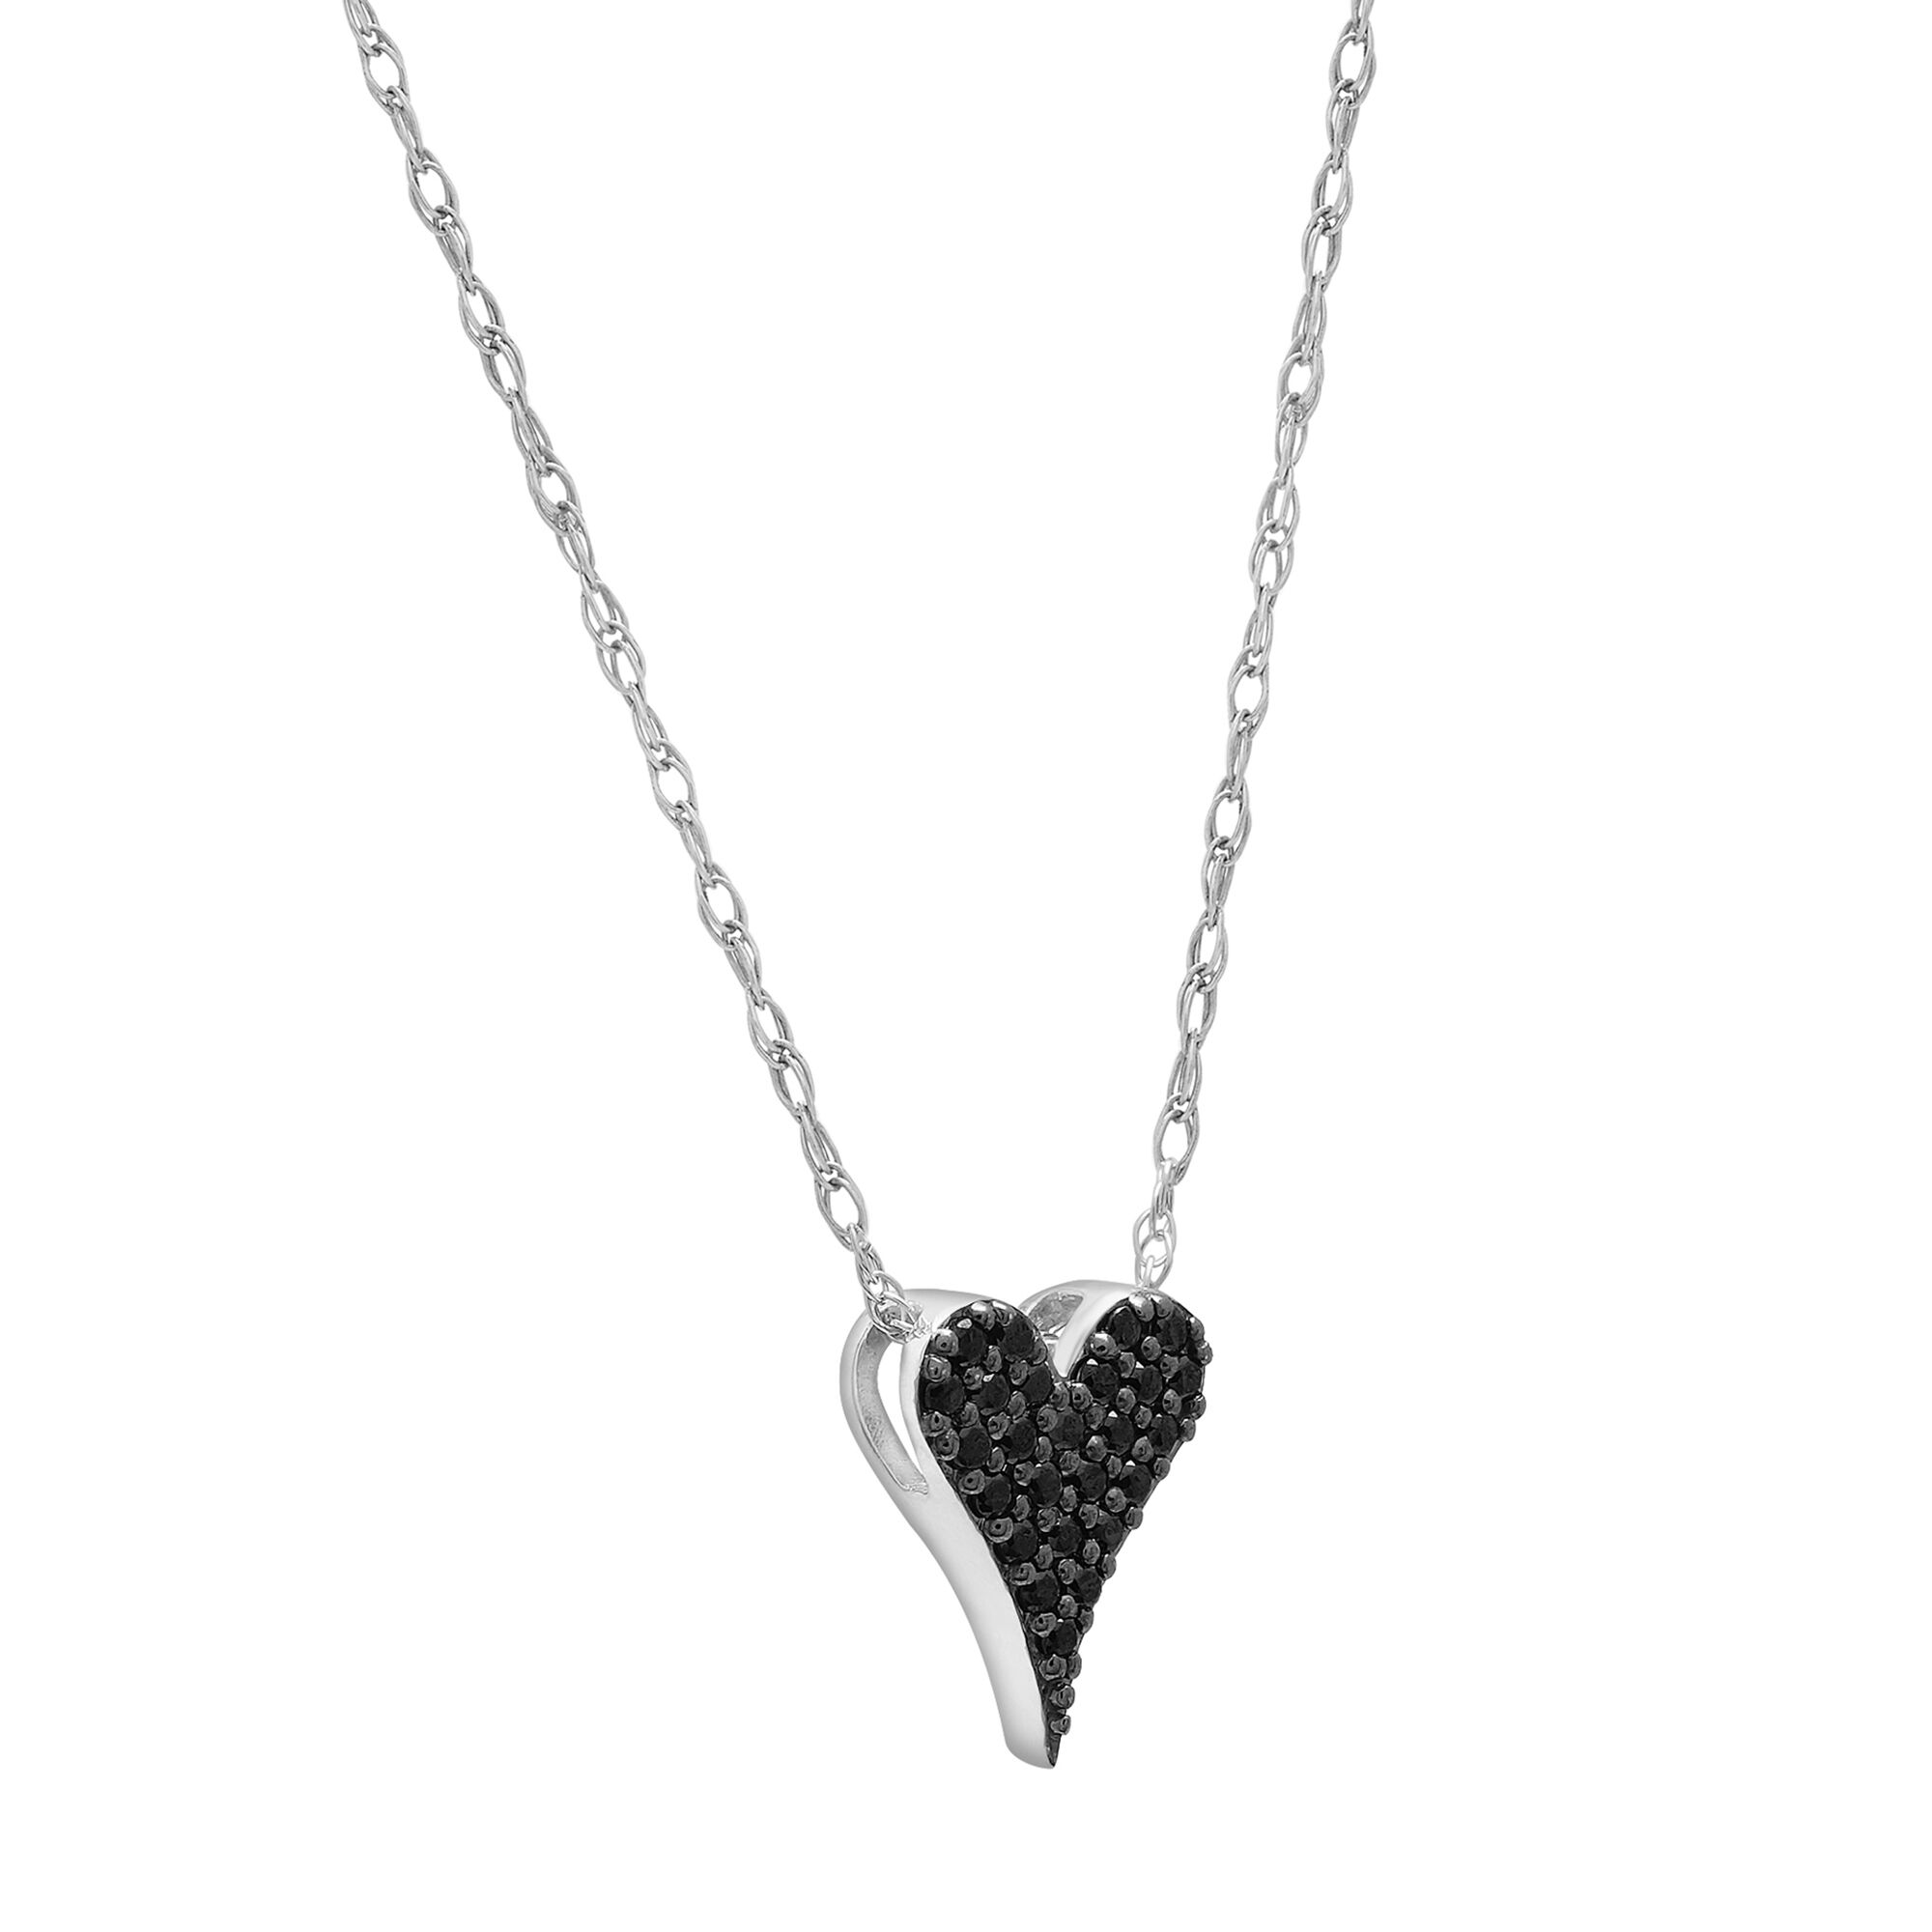 Diamond Heart Necklace Black & White Sterling Silver 18